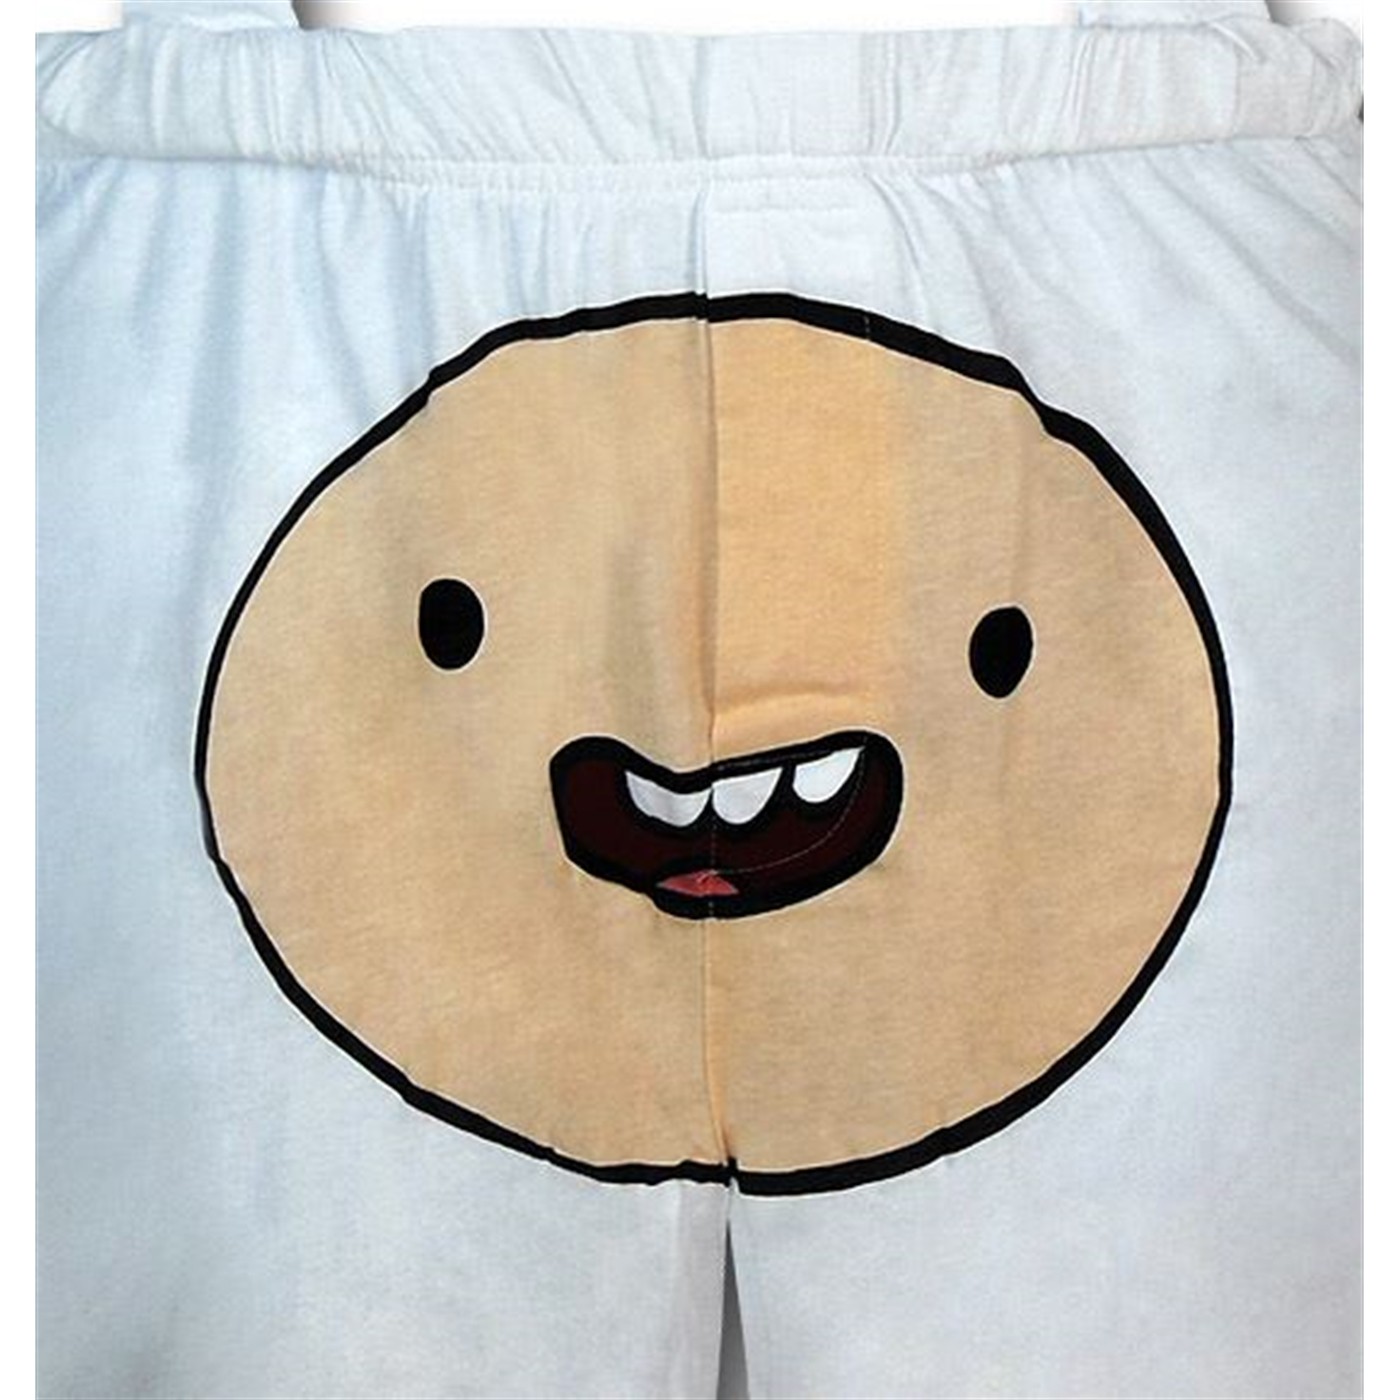 Adventure Time Finn Face Boxers